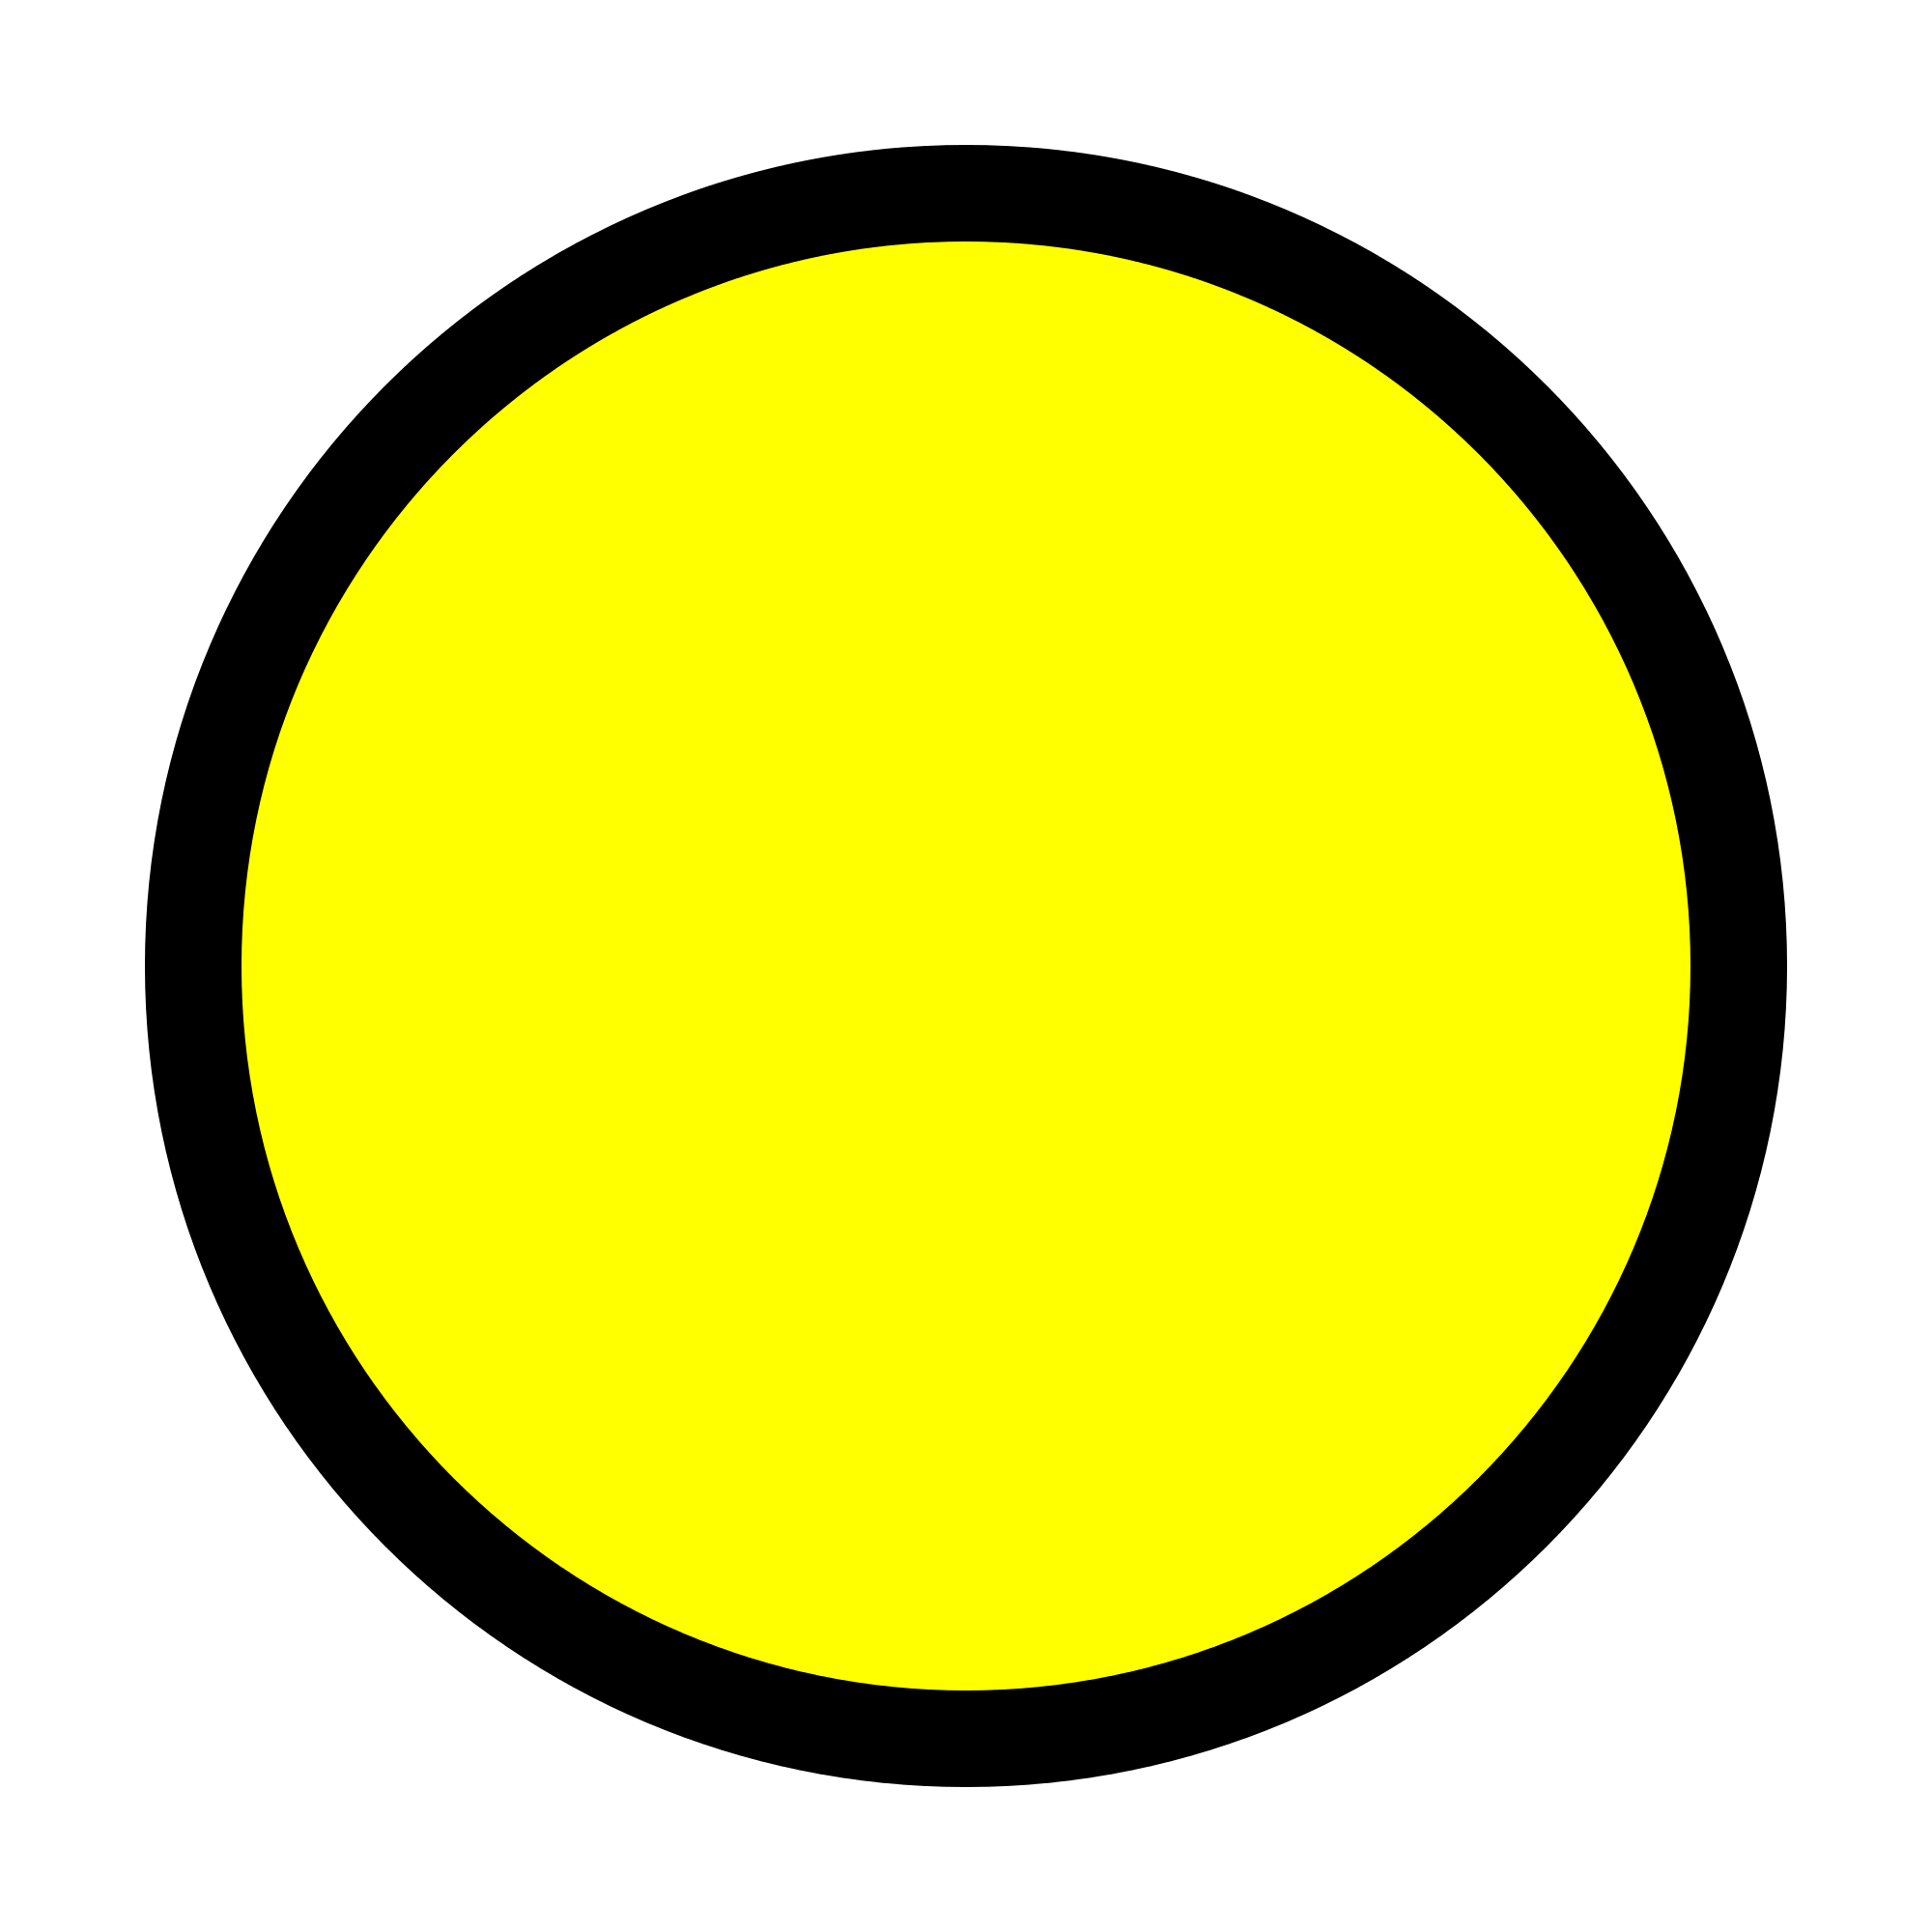 Black and Yellow Circle Logo - File:Circle-yellow.svg - Wikimedia Commons